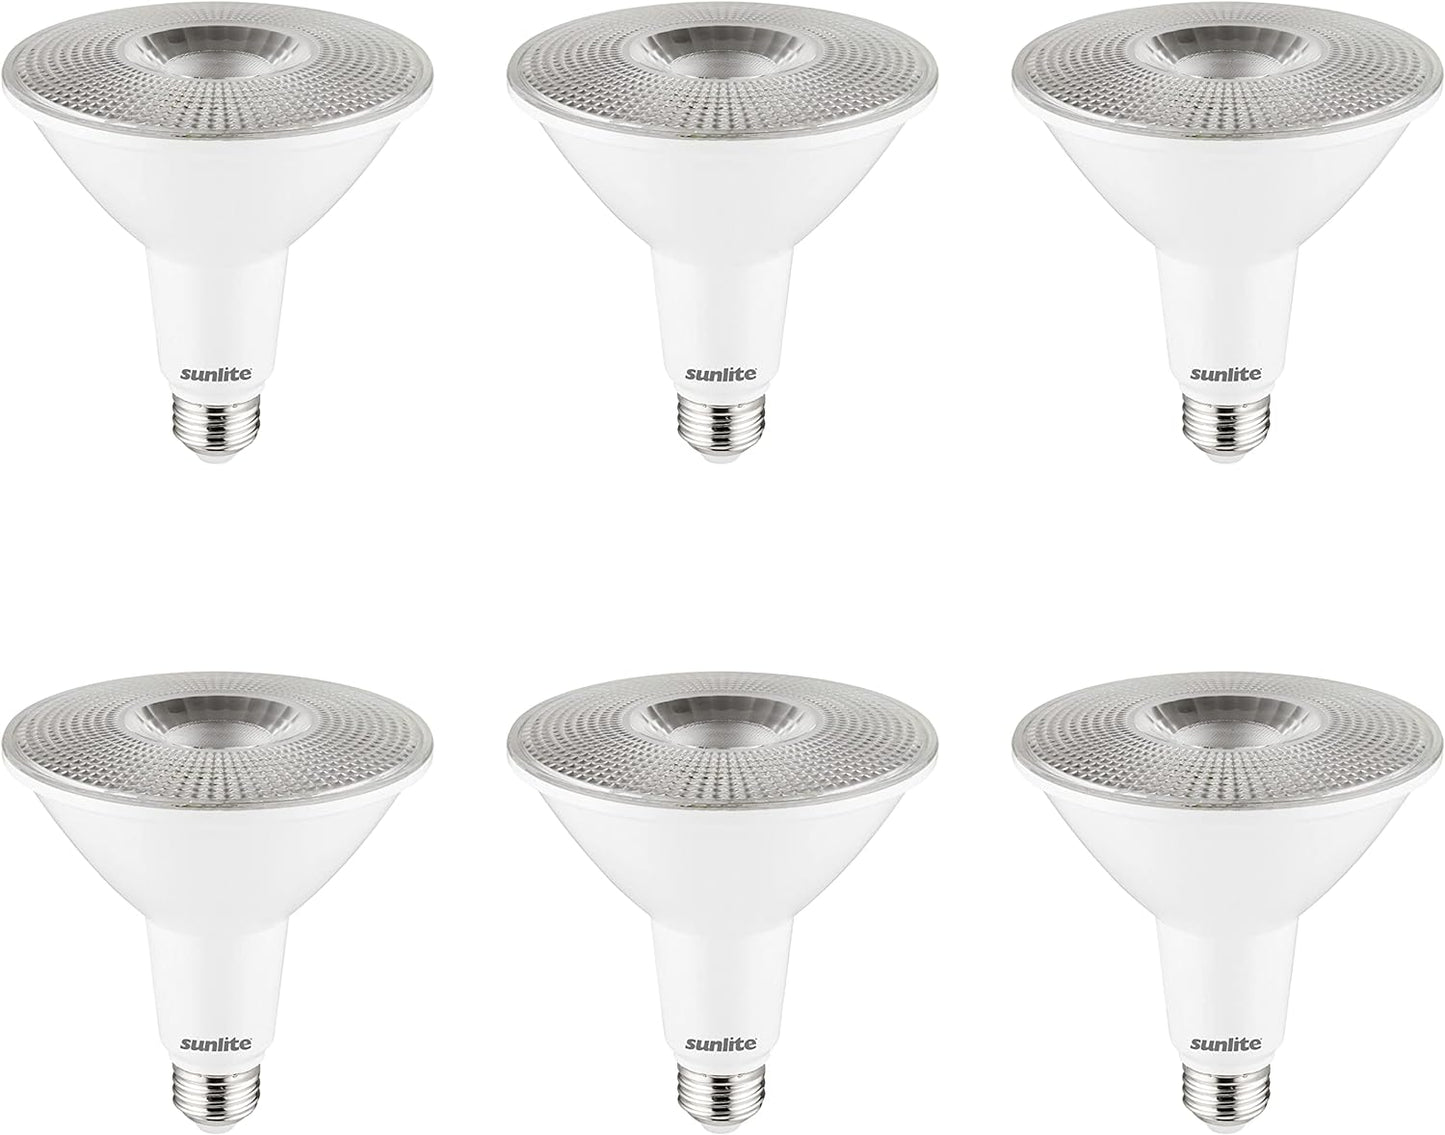 Sunlite LED PAR38 Long Neck Spotlight Bulb, 15 Watt (100W Halogen EQ), 1200 Lm, 40° Flood Beam, Medium E26 Base, 90 CRI, Waterproof, Dimmable, T20/T24/CEC & UL Listed, 2700K Soft White, 6 Count